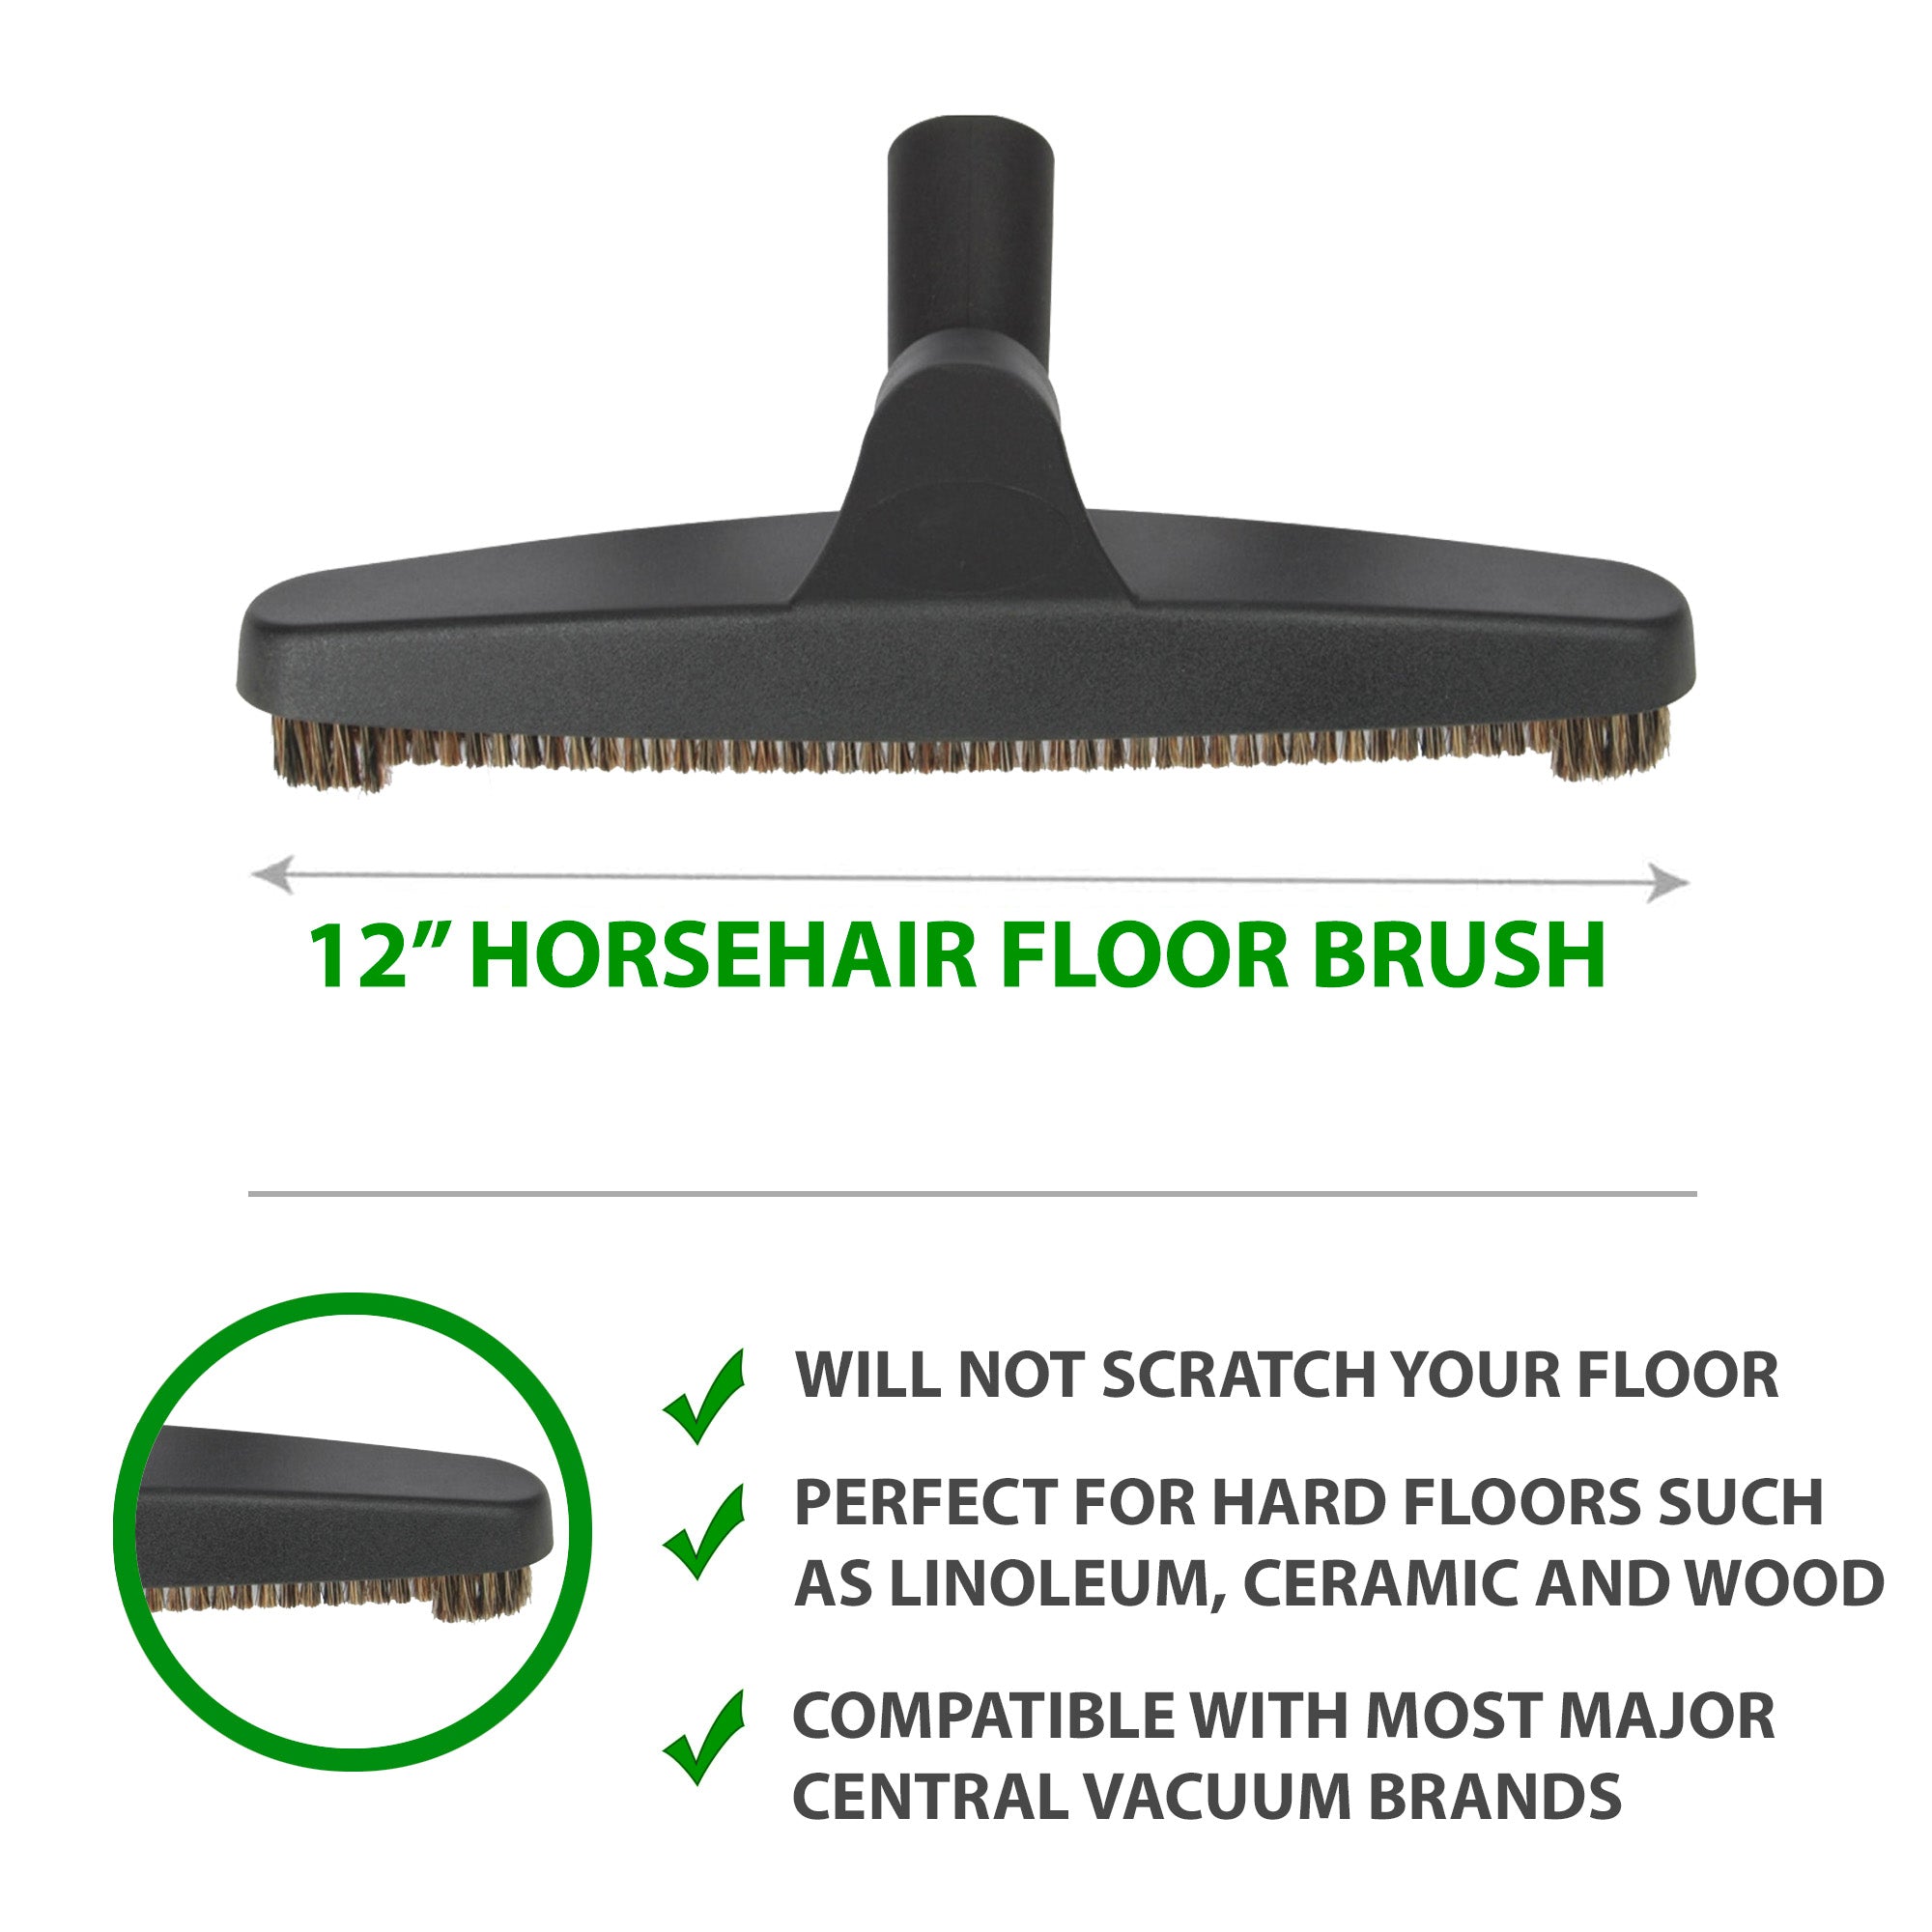 12" Horsehair floor brush perfect for hard floors such as linoleum, ceramic and wood